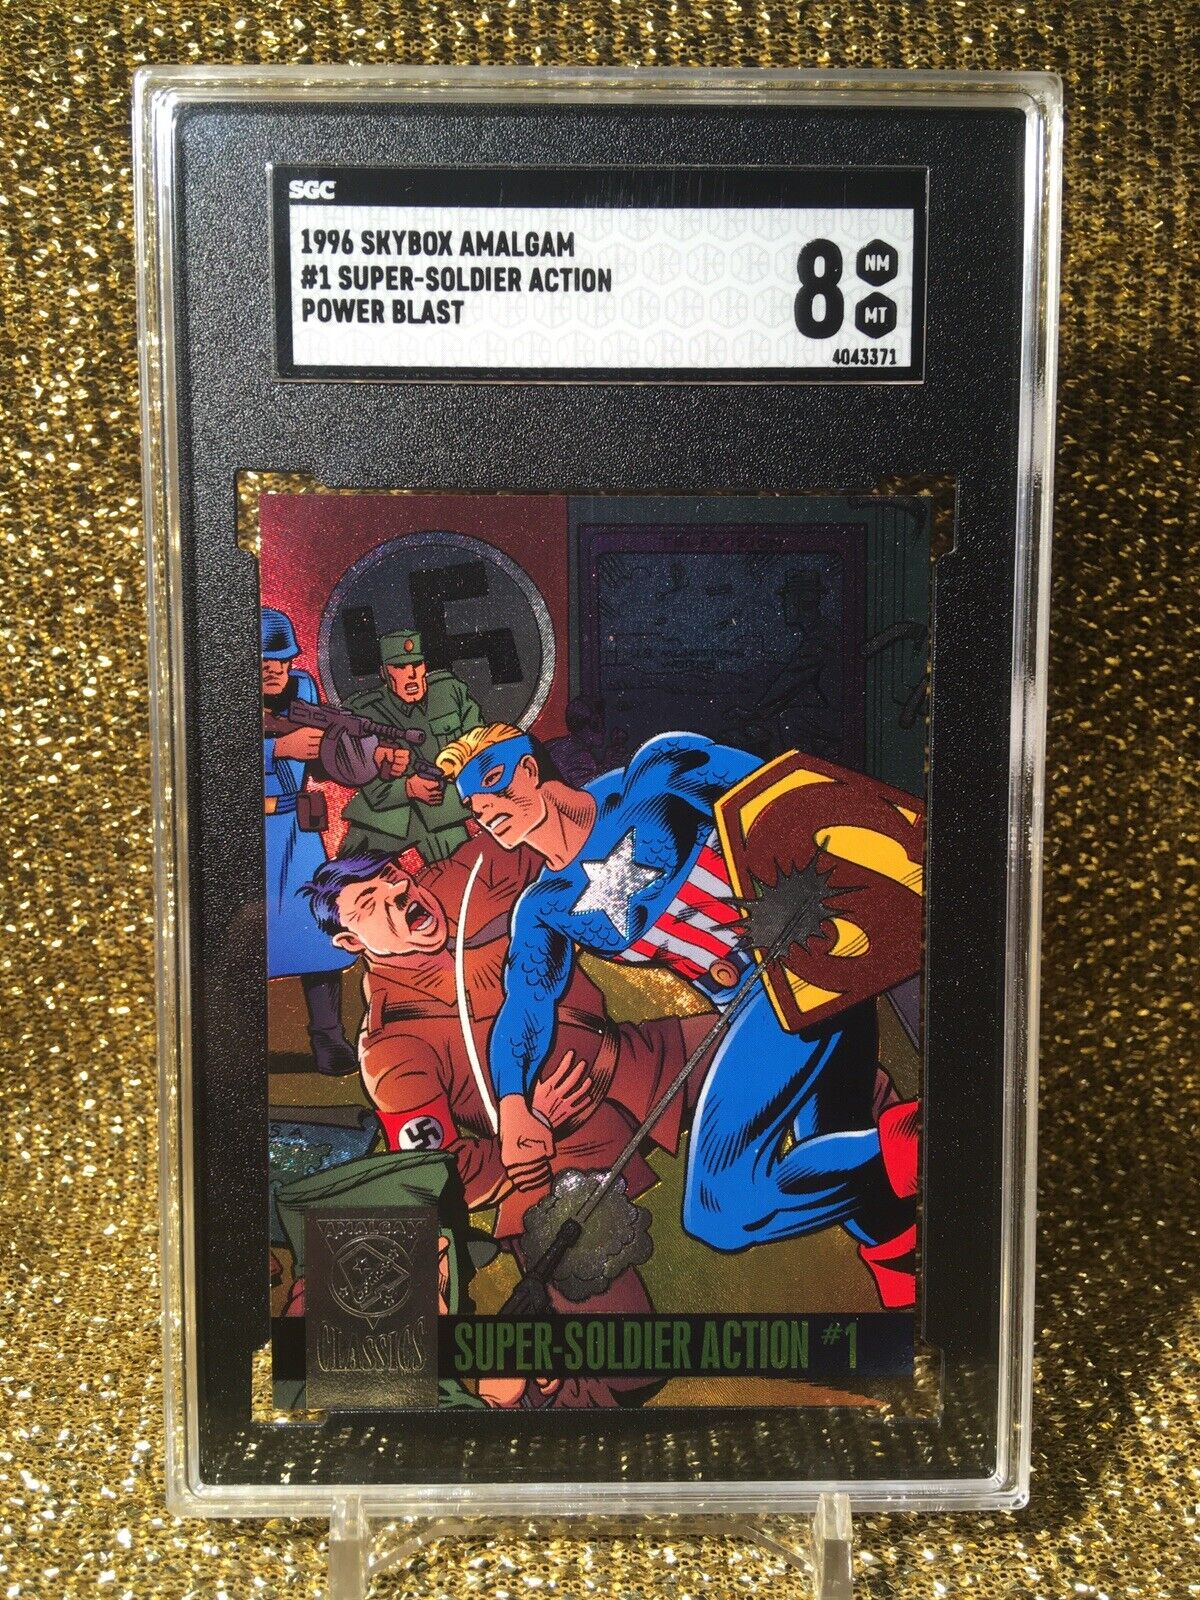 Super Soldier Action 1996 Skybox amalgam 1 Marvel DC Comics Power Blast SGC 8 RC